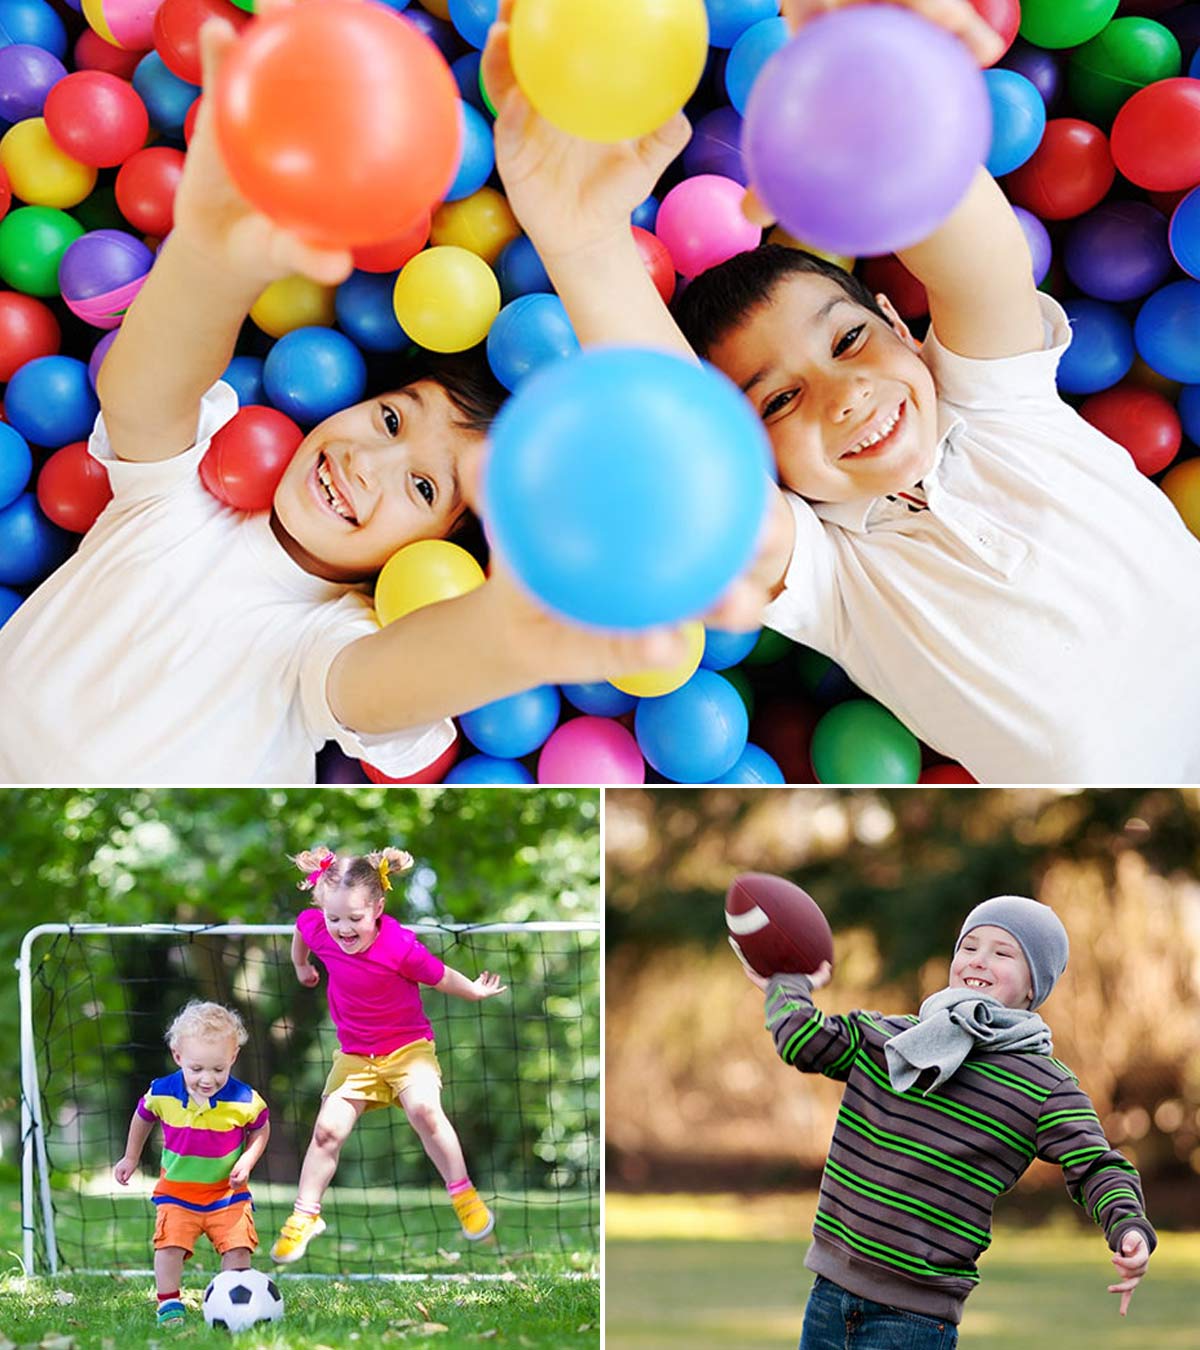 15 Fun Ball Games For Kids